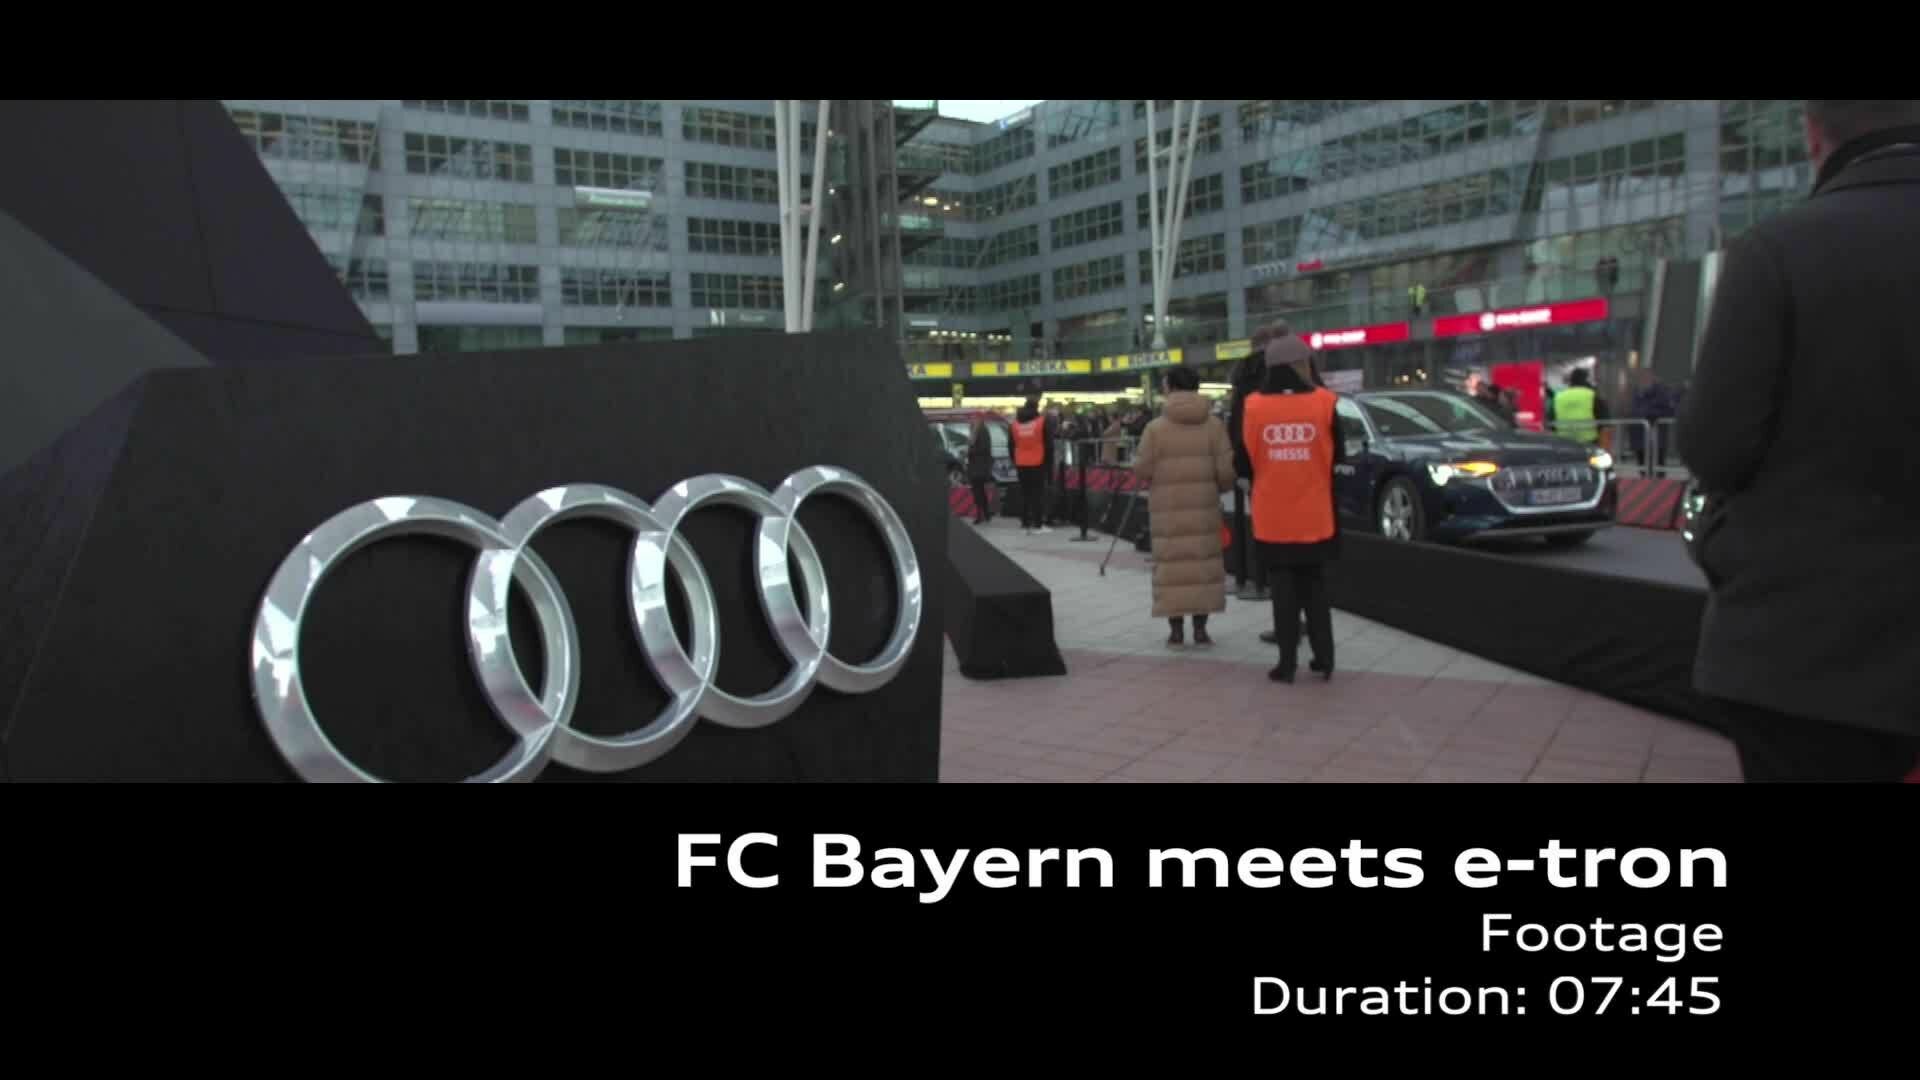 FC Bayern meets Audi e-tron (Footage)